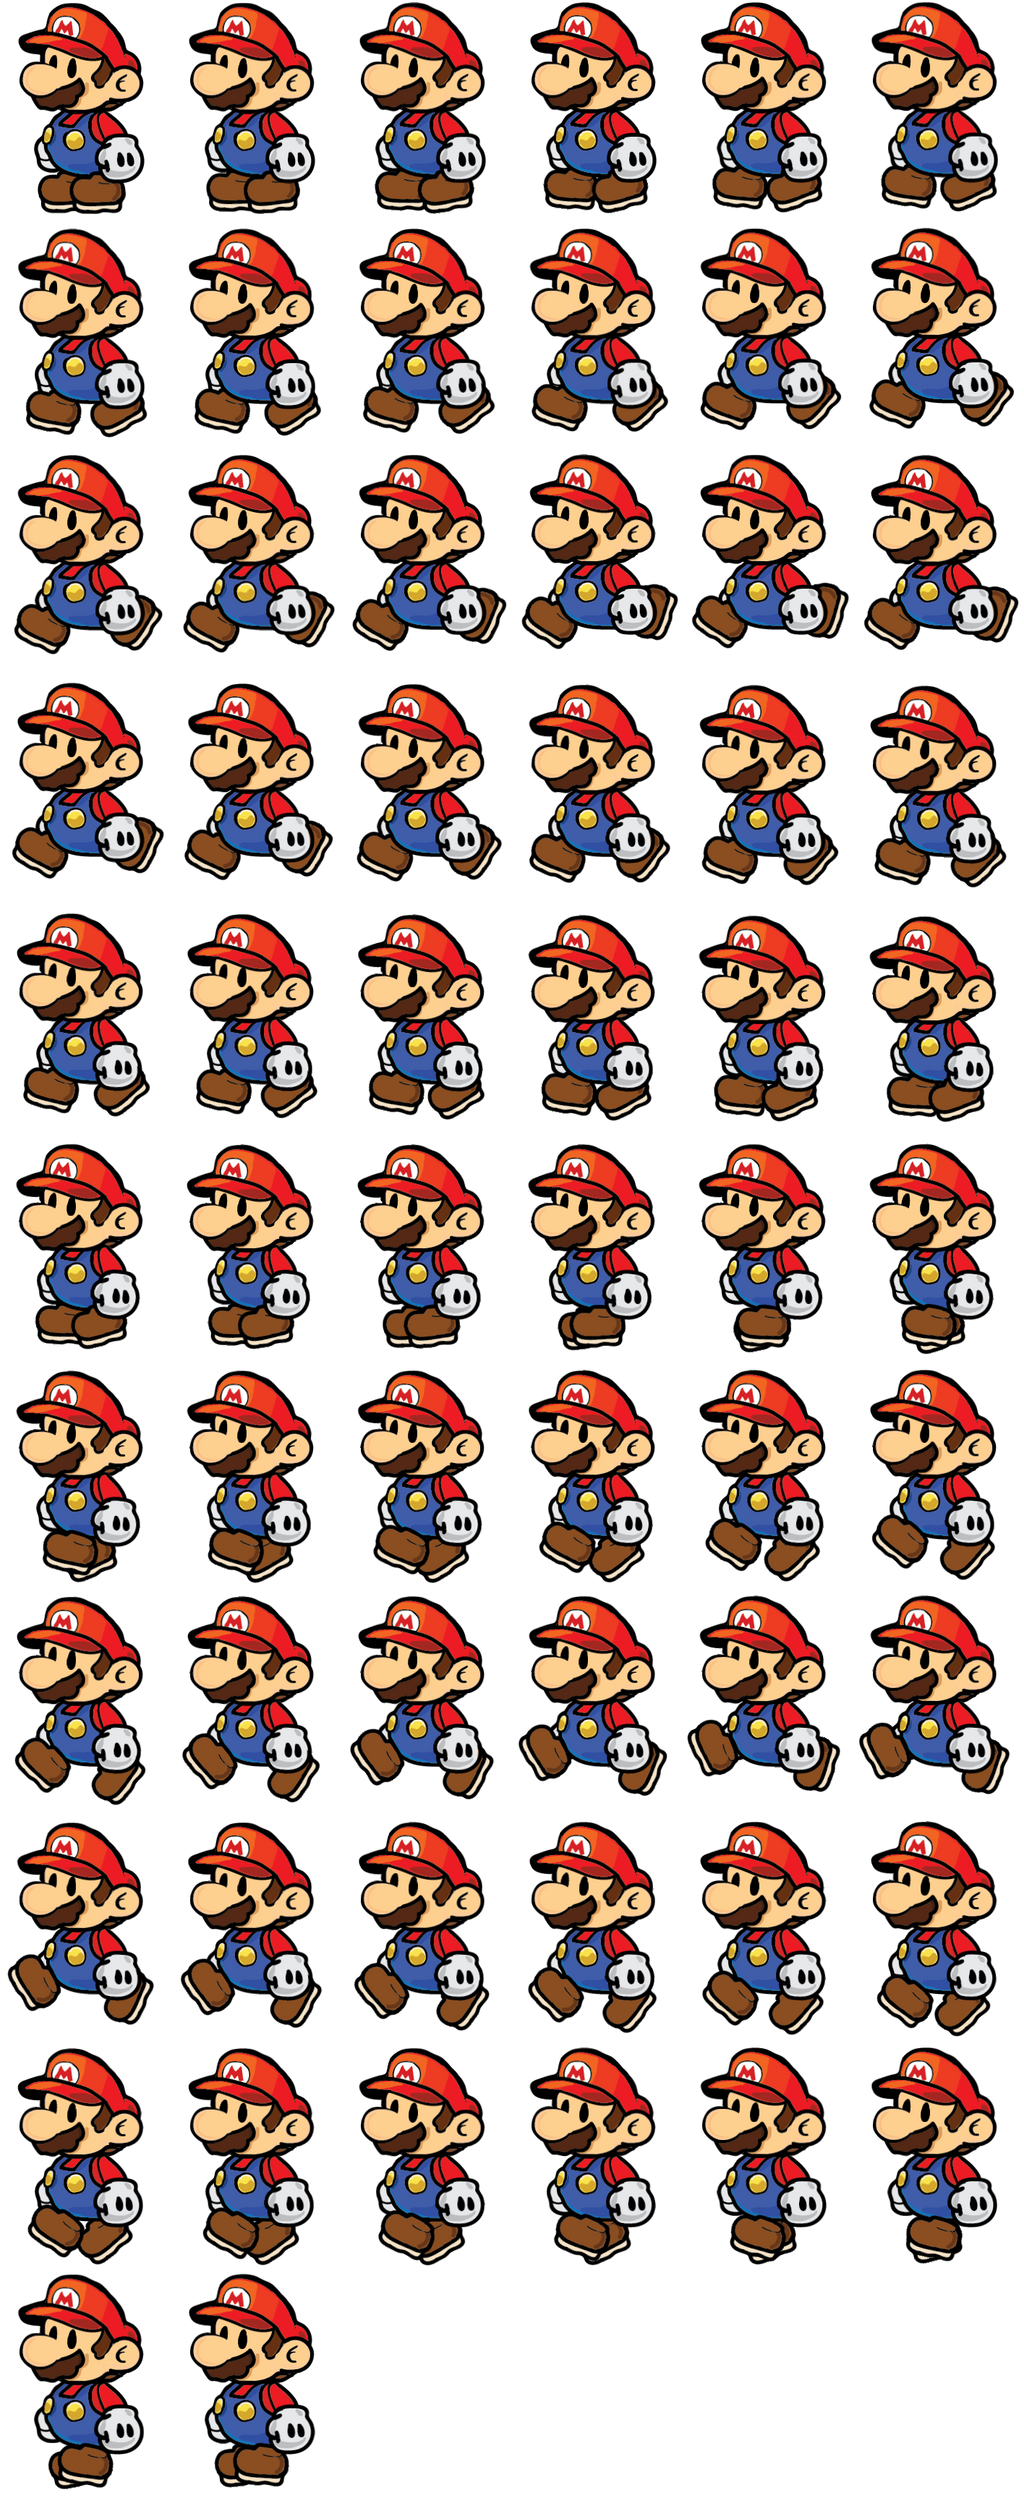 Super Mario World Mario Sprite Sheet